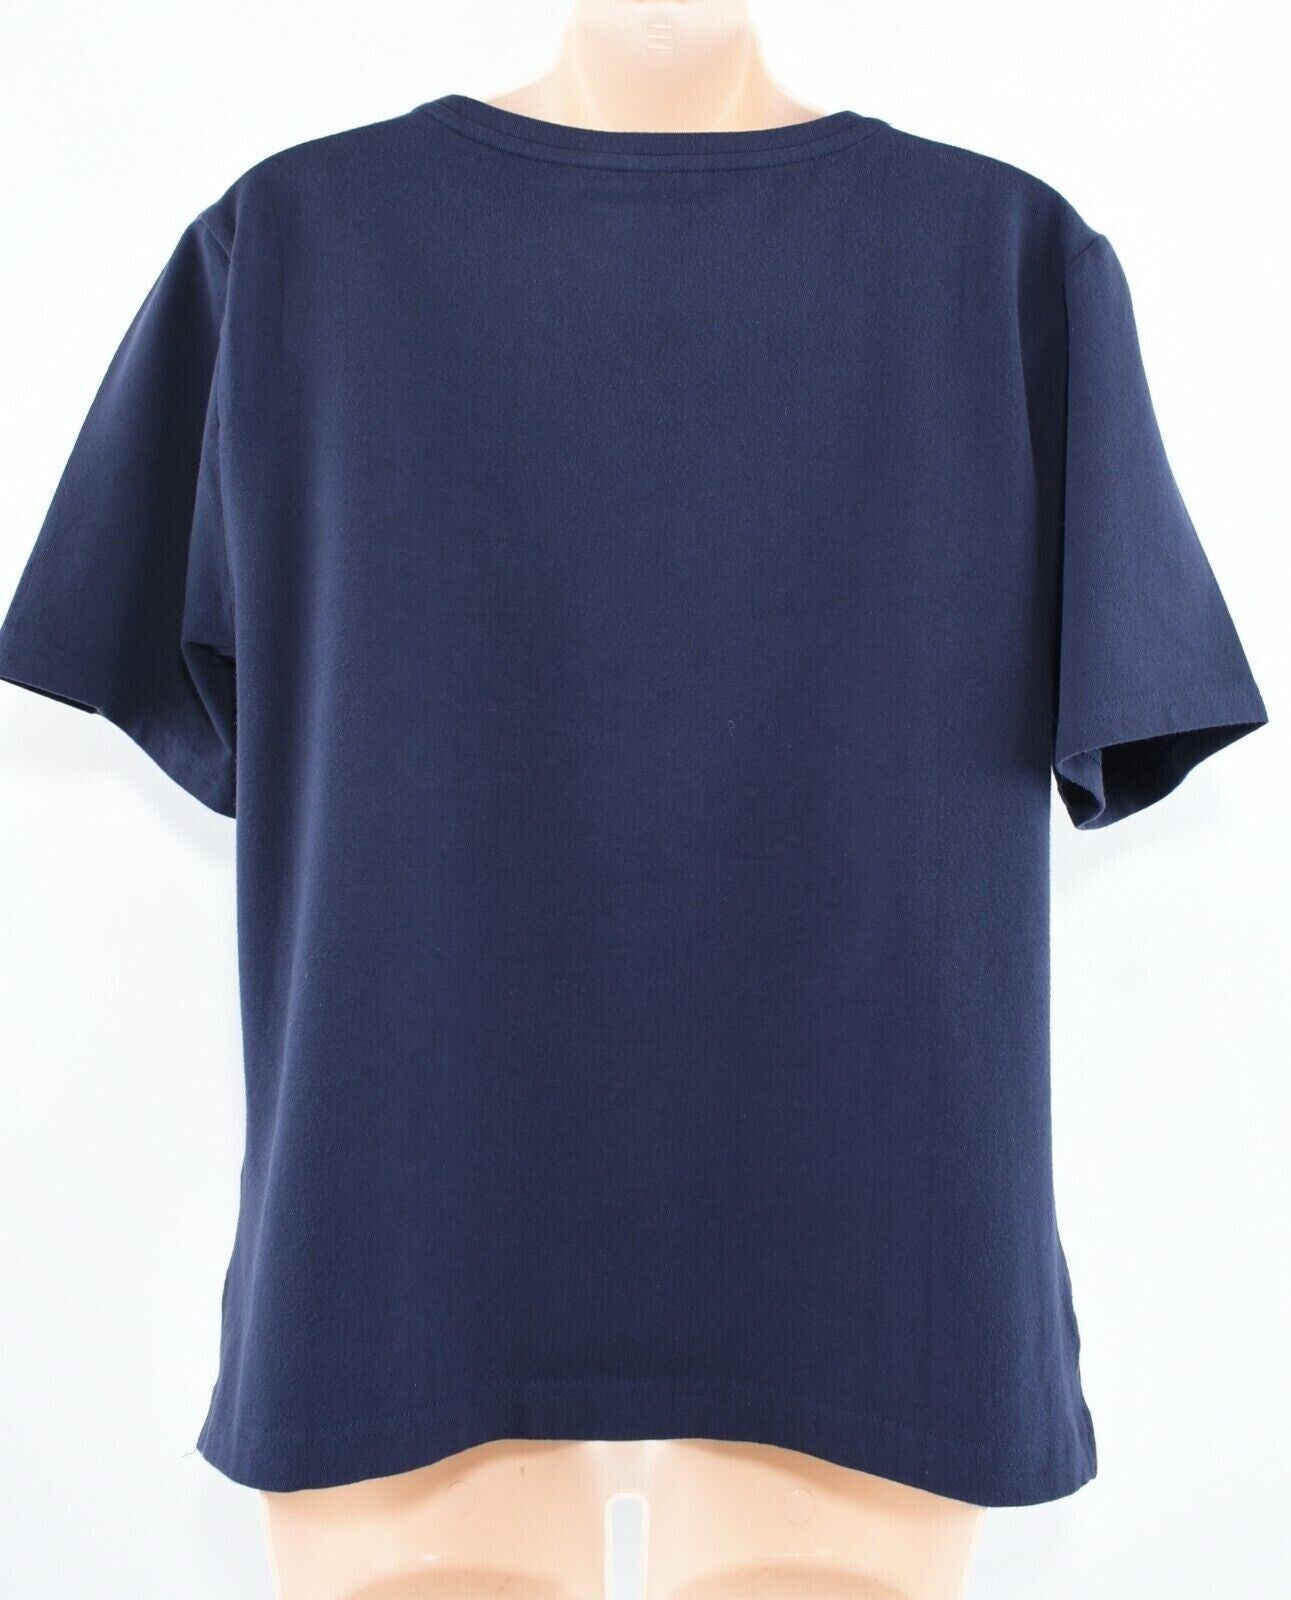 TOMMY HILFIGER Women's T-shirt Top, Navy Blue, size XS (UK 8)